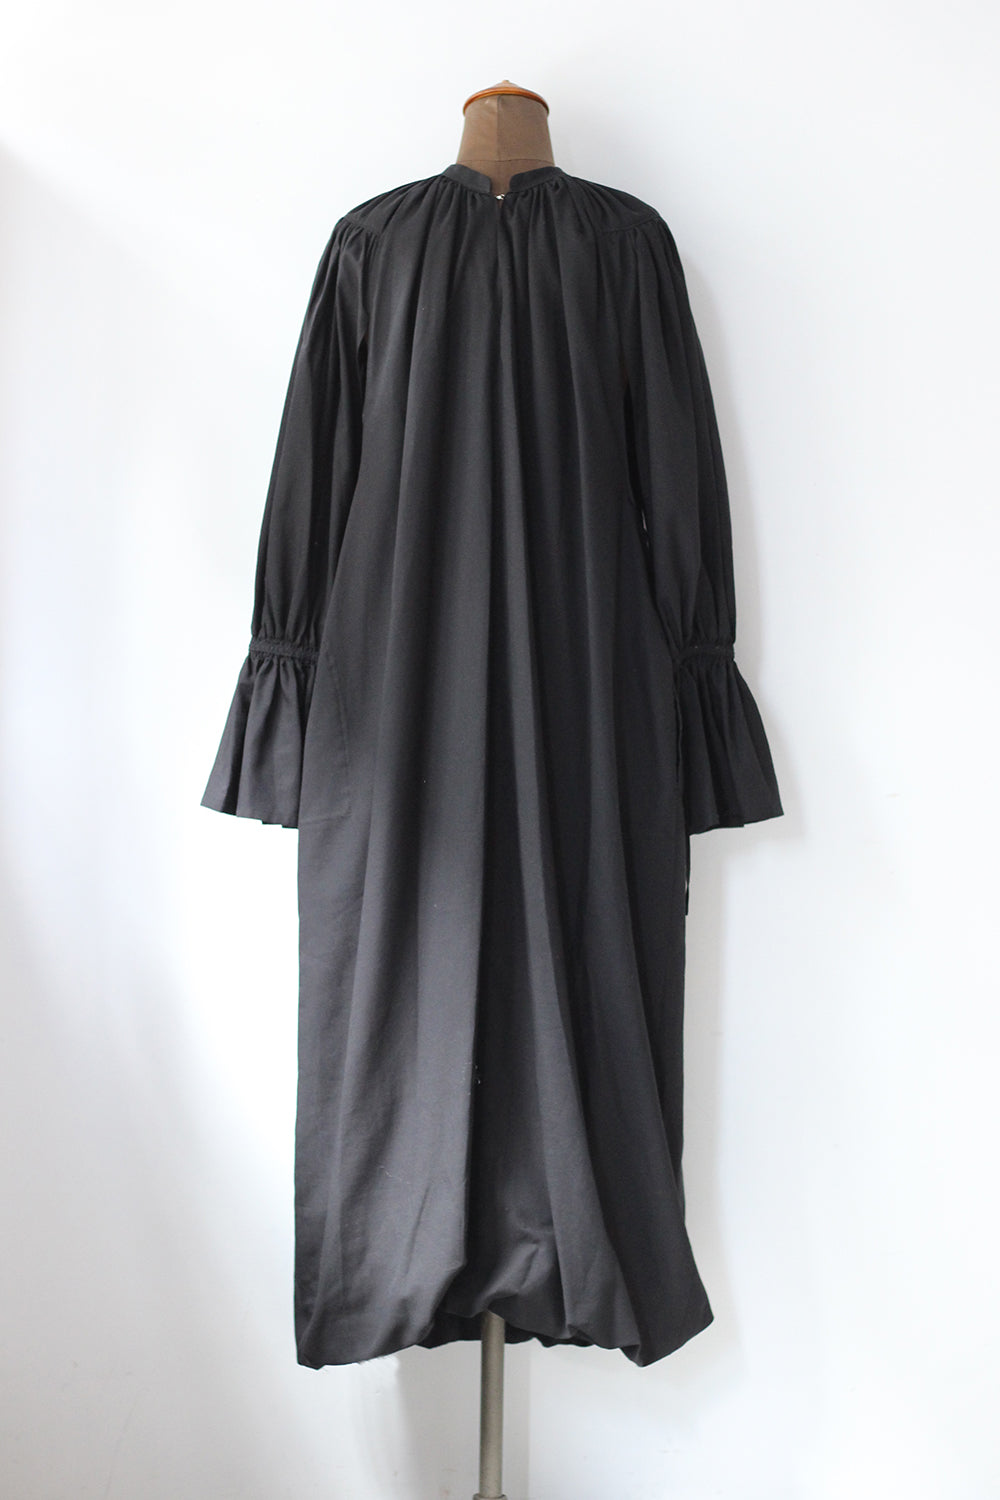 WRYHT "GATHERED SLEEVE FOLK DRESS" (black)